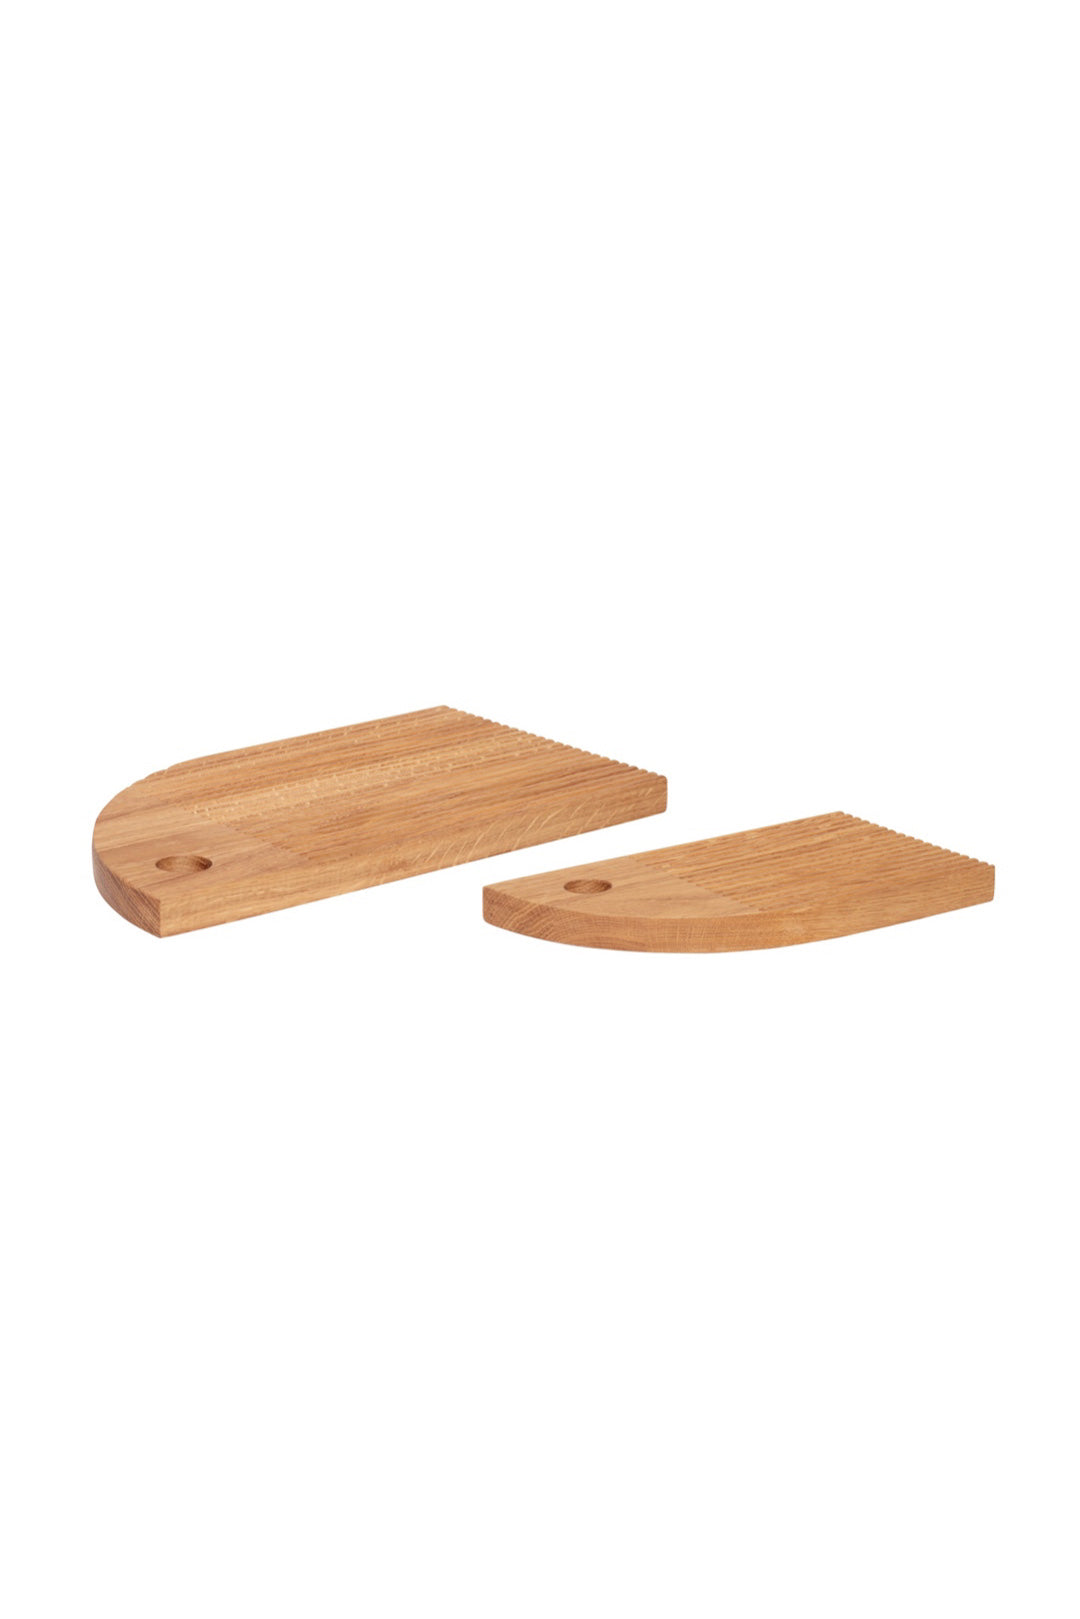 Grooved Oak Cutting Boards